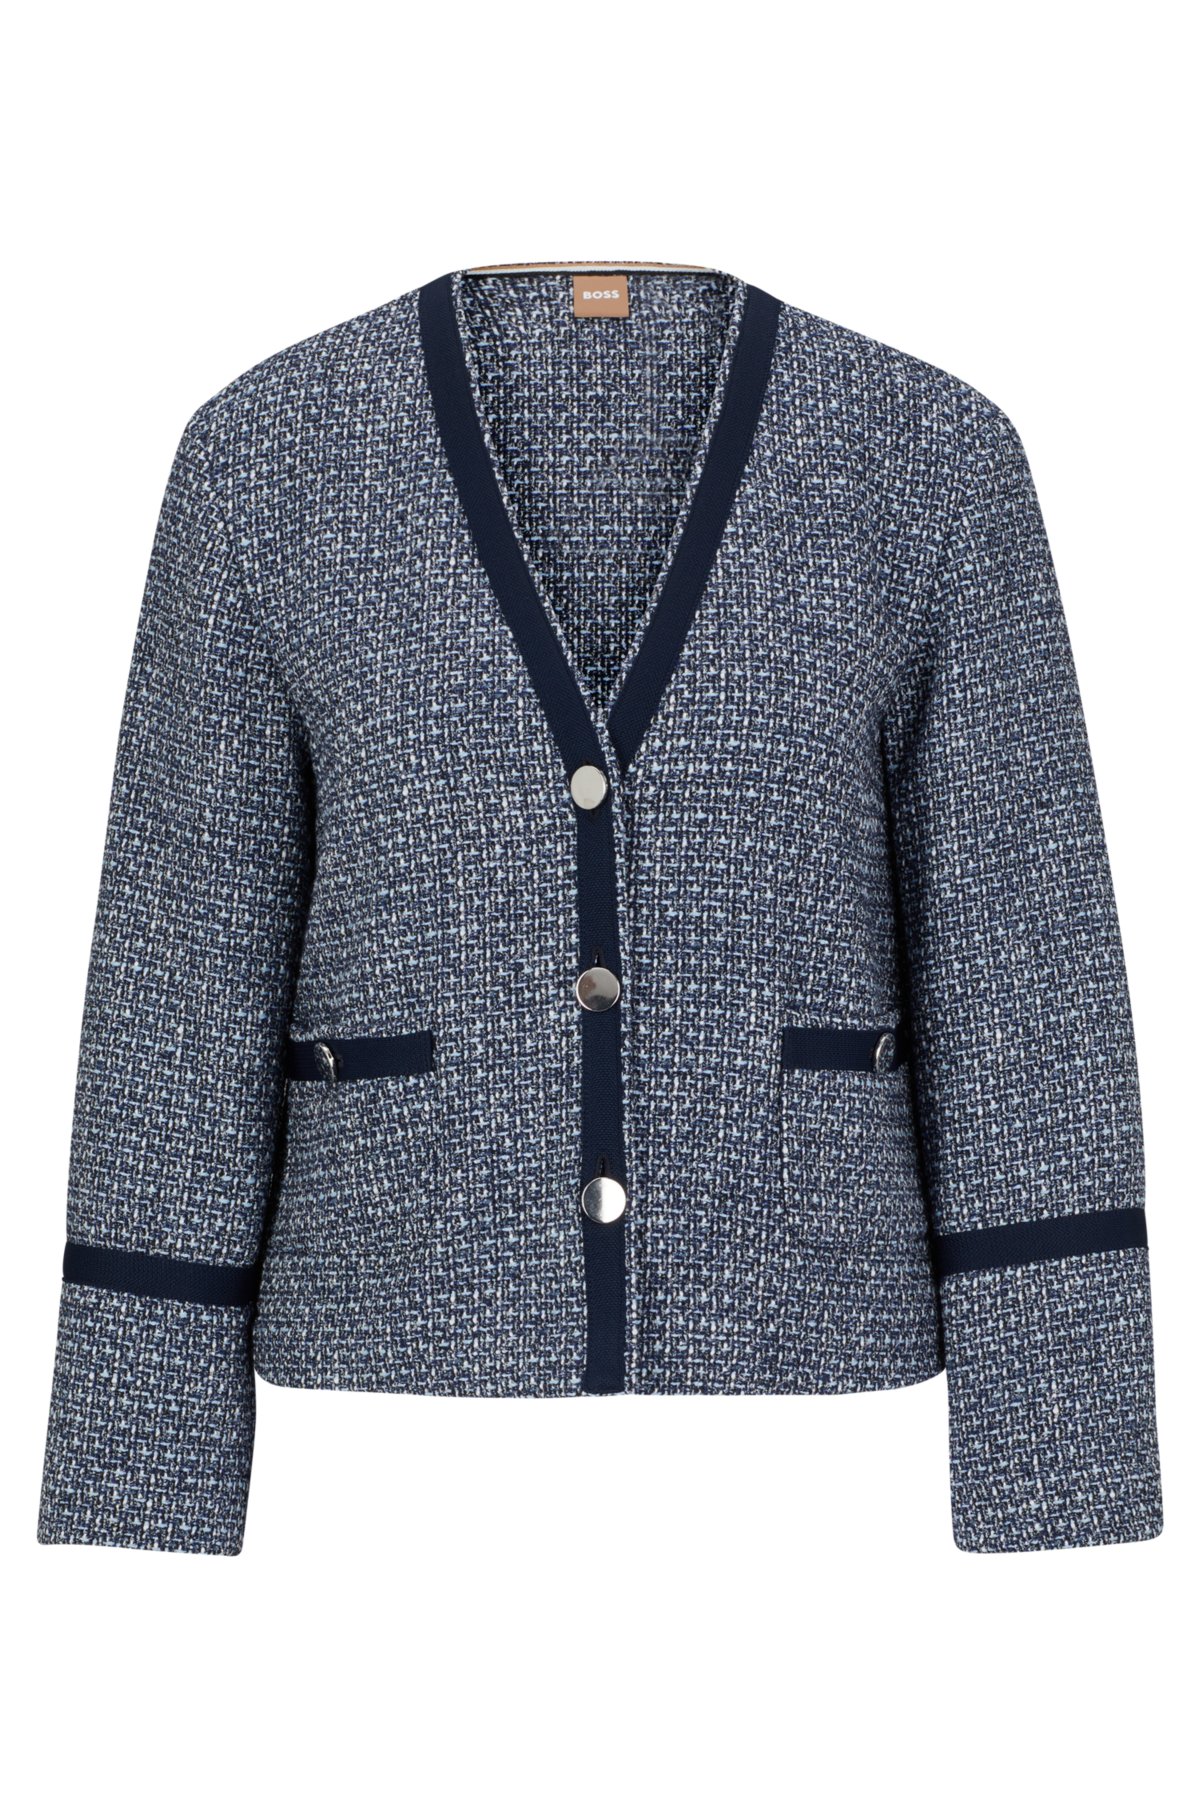 Vintage chanel tweed jacket - Gem